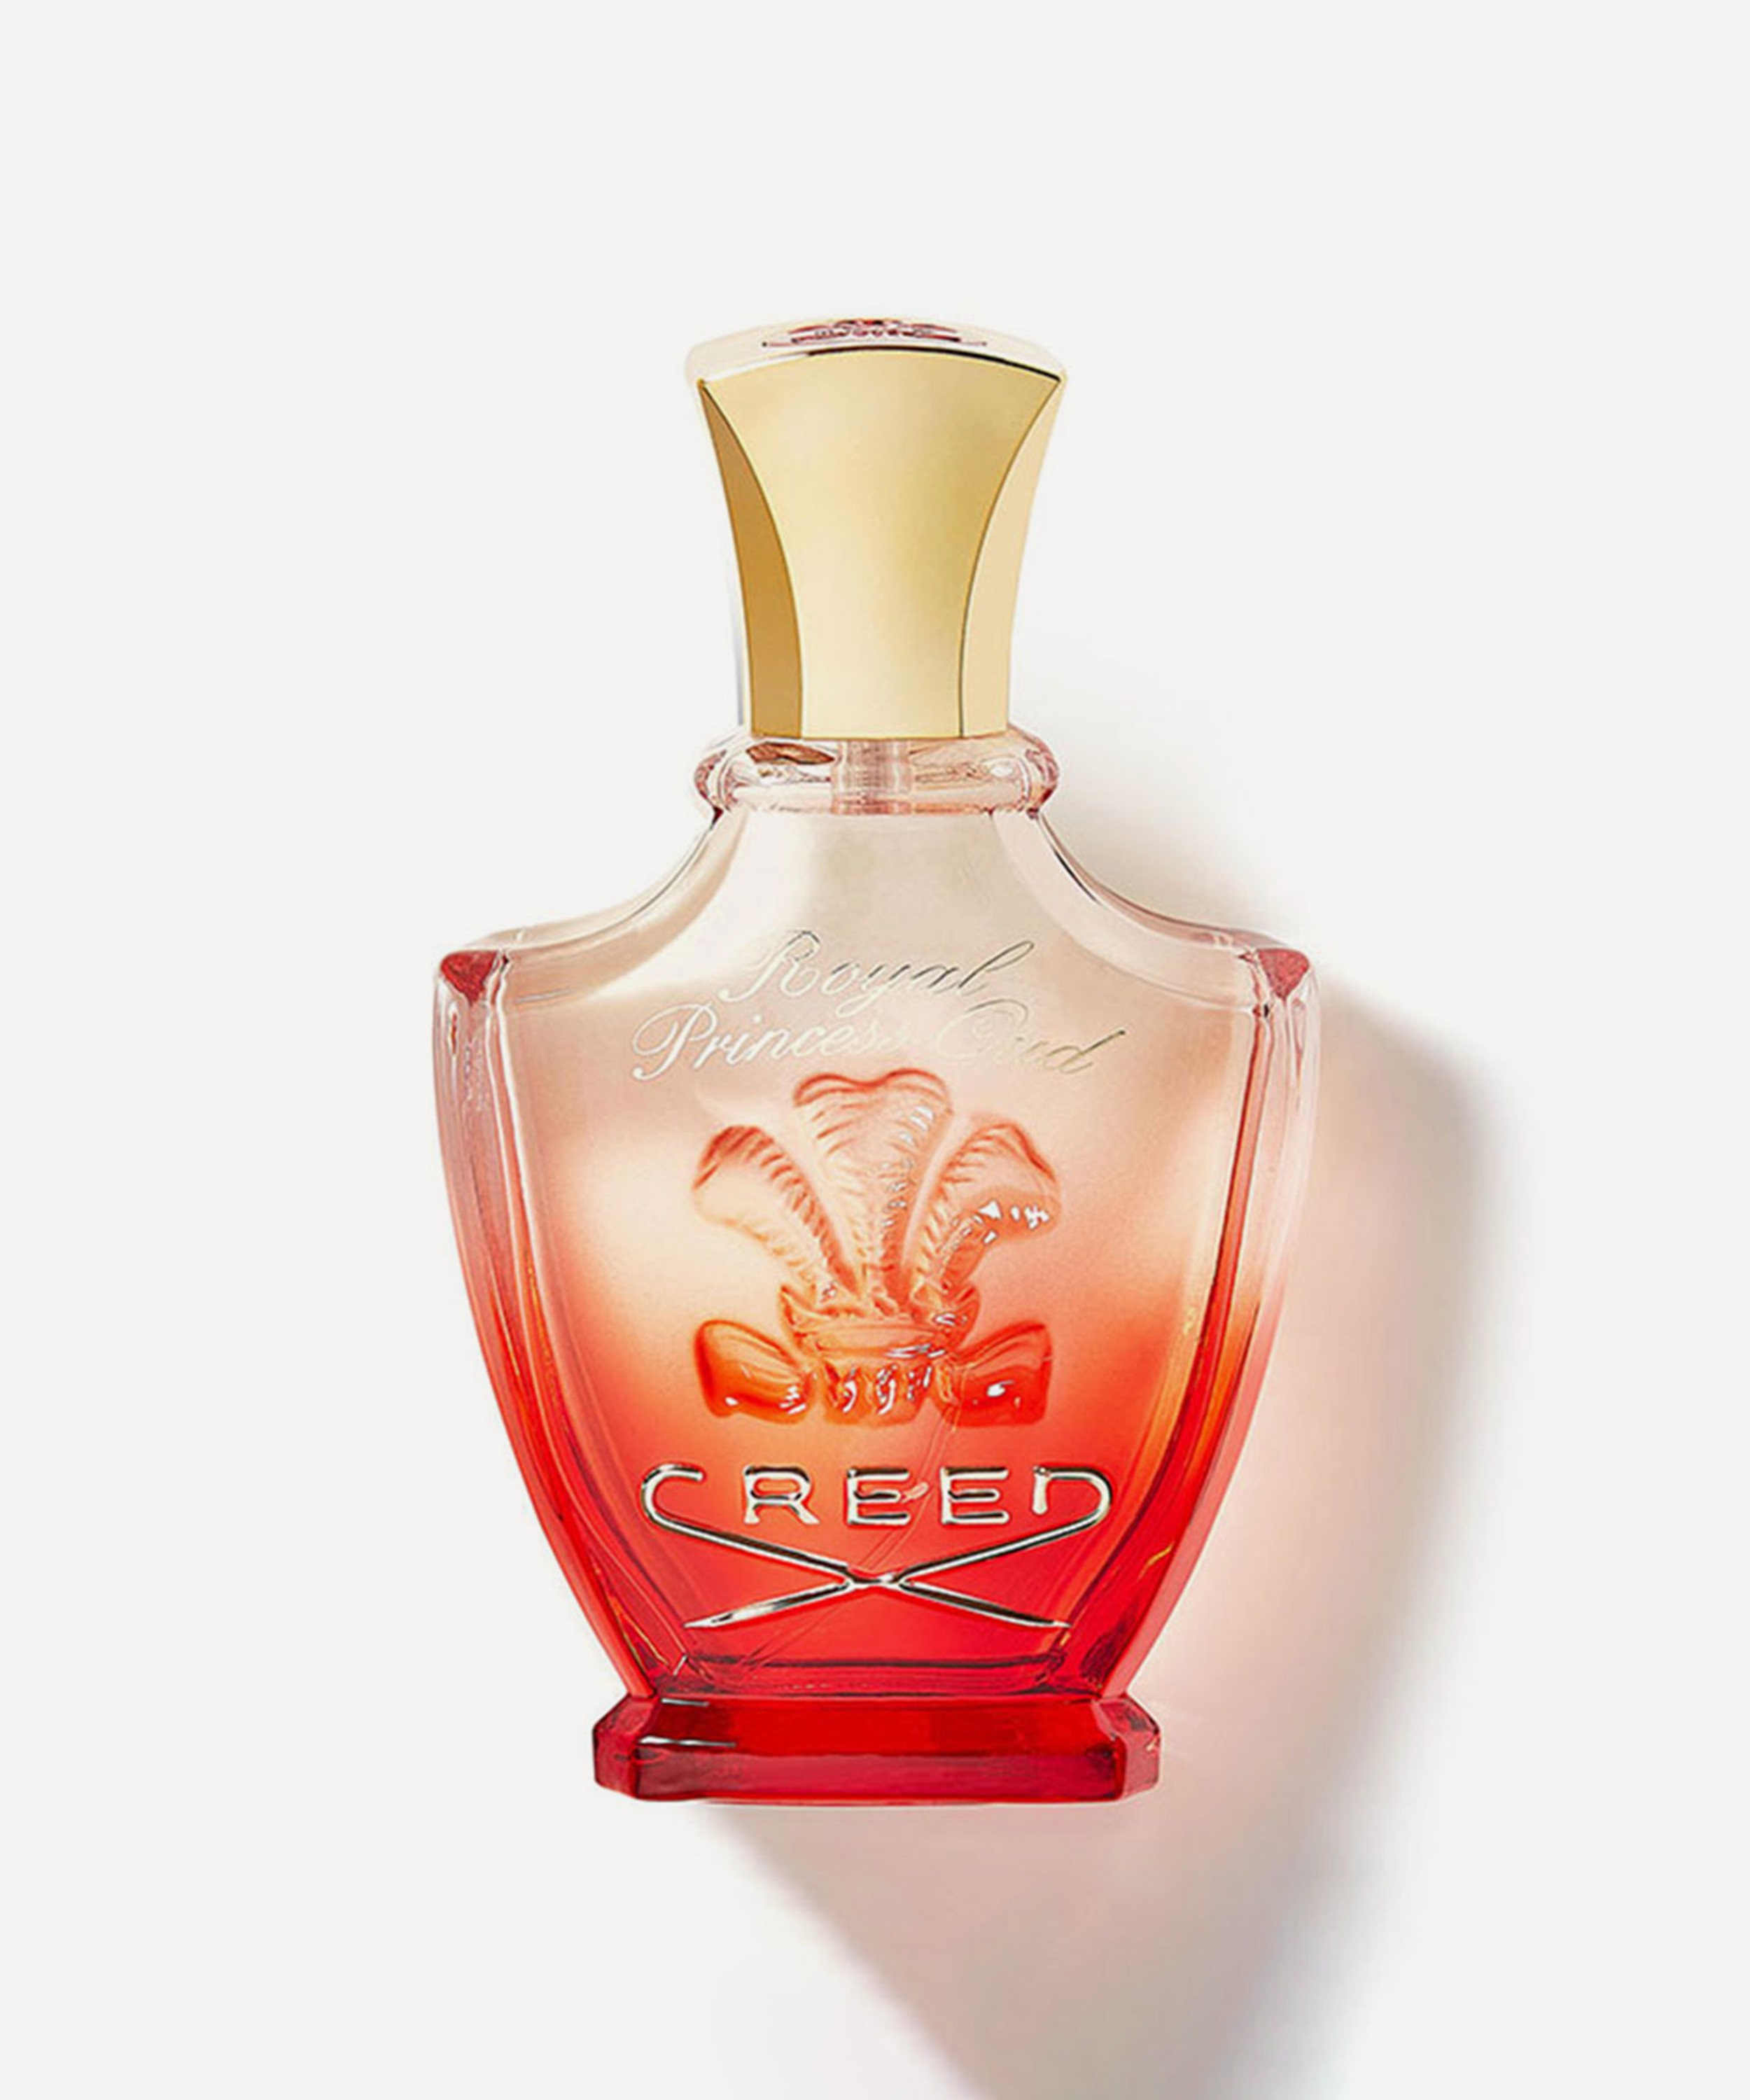 Creed - Royal Princess Oud Eau de Parfum 75ml